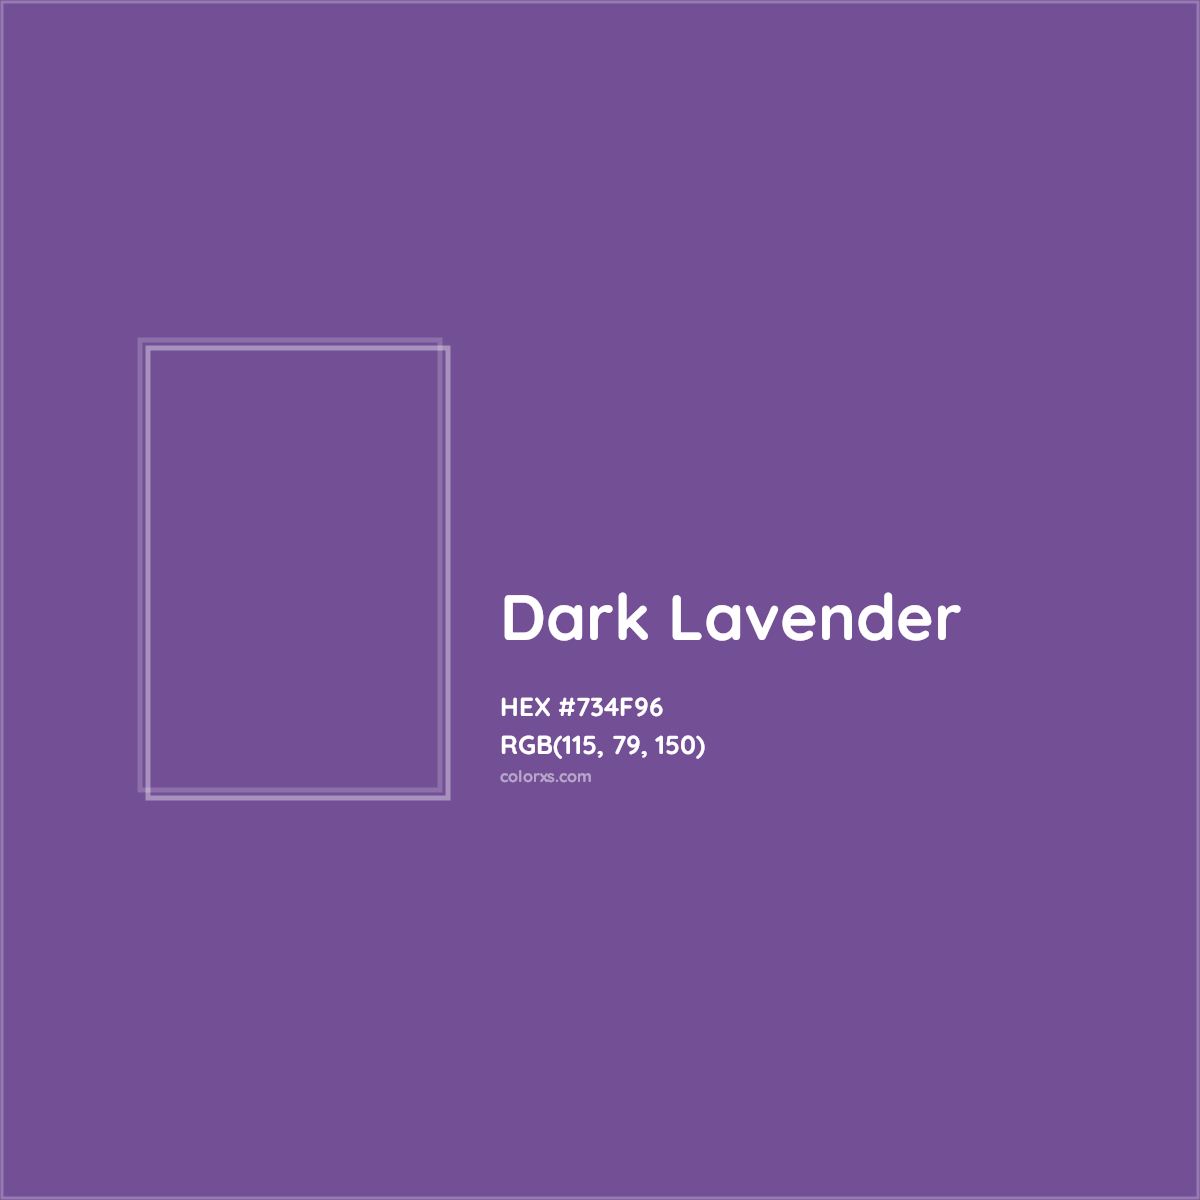 HEX #734F96 Dark Lavender Color - Color Code